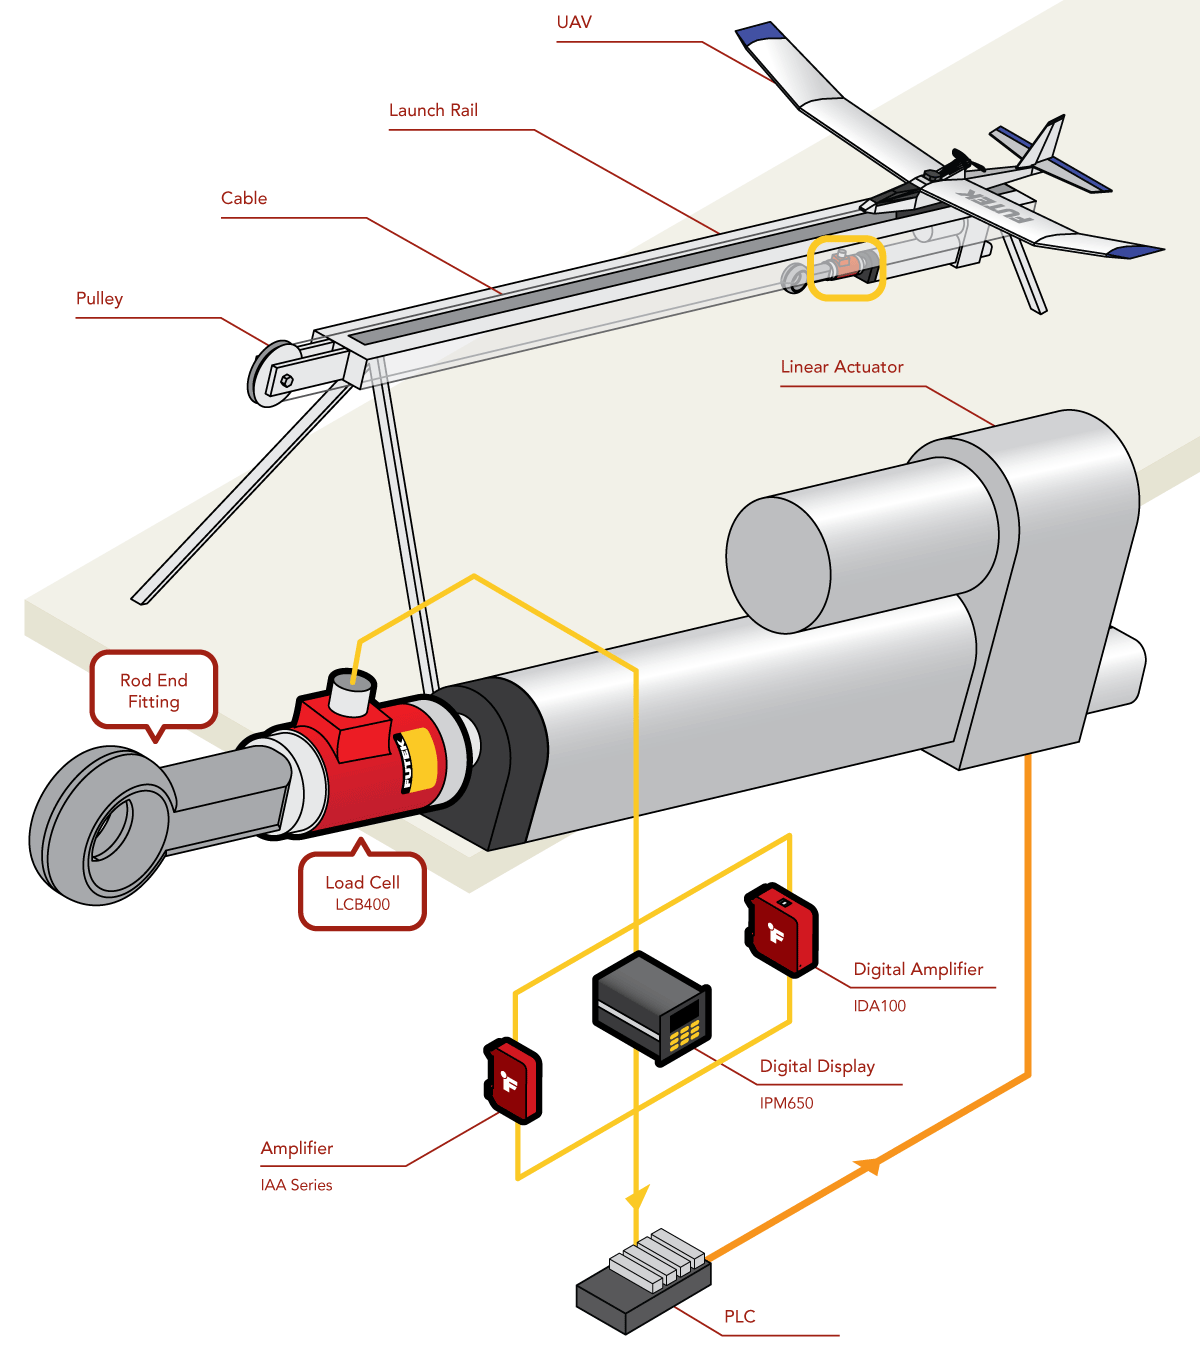 UAV Launcher Force